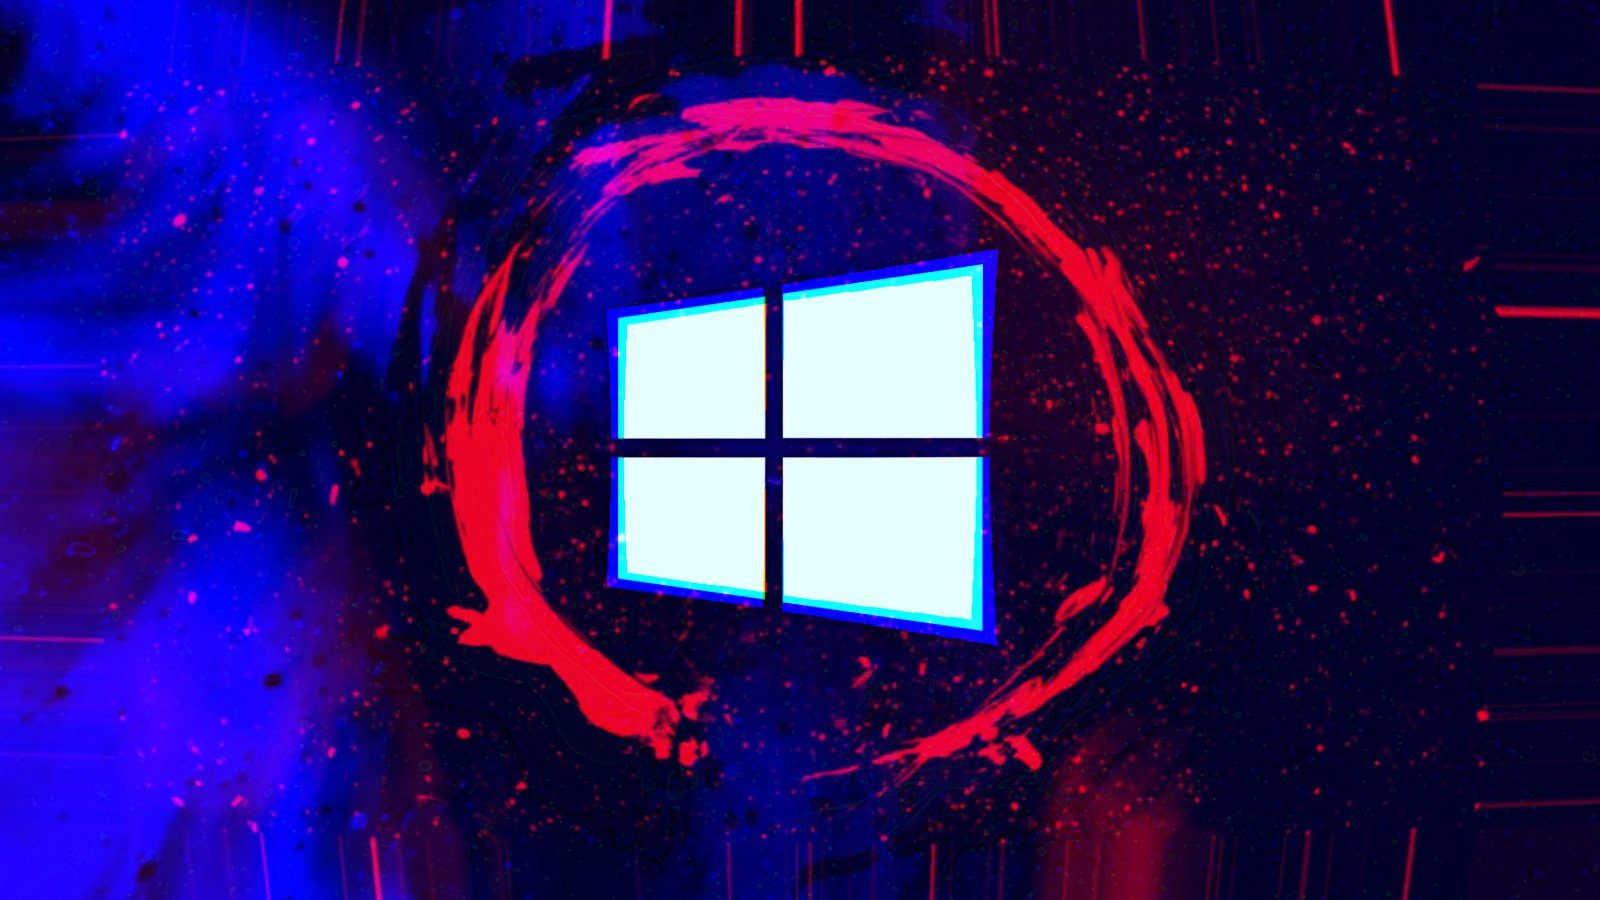 Pirated Windows 10 ISOs install clipper malware via EFI partitions – Source: www.bleepingcomputer.com